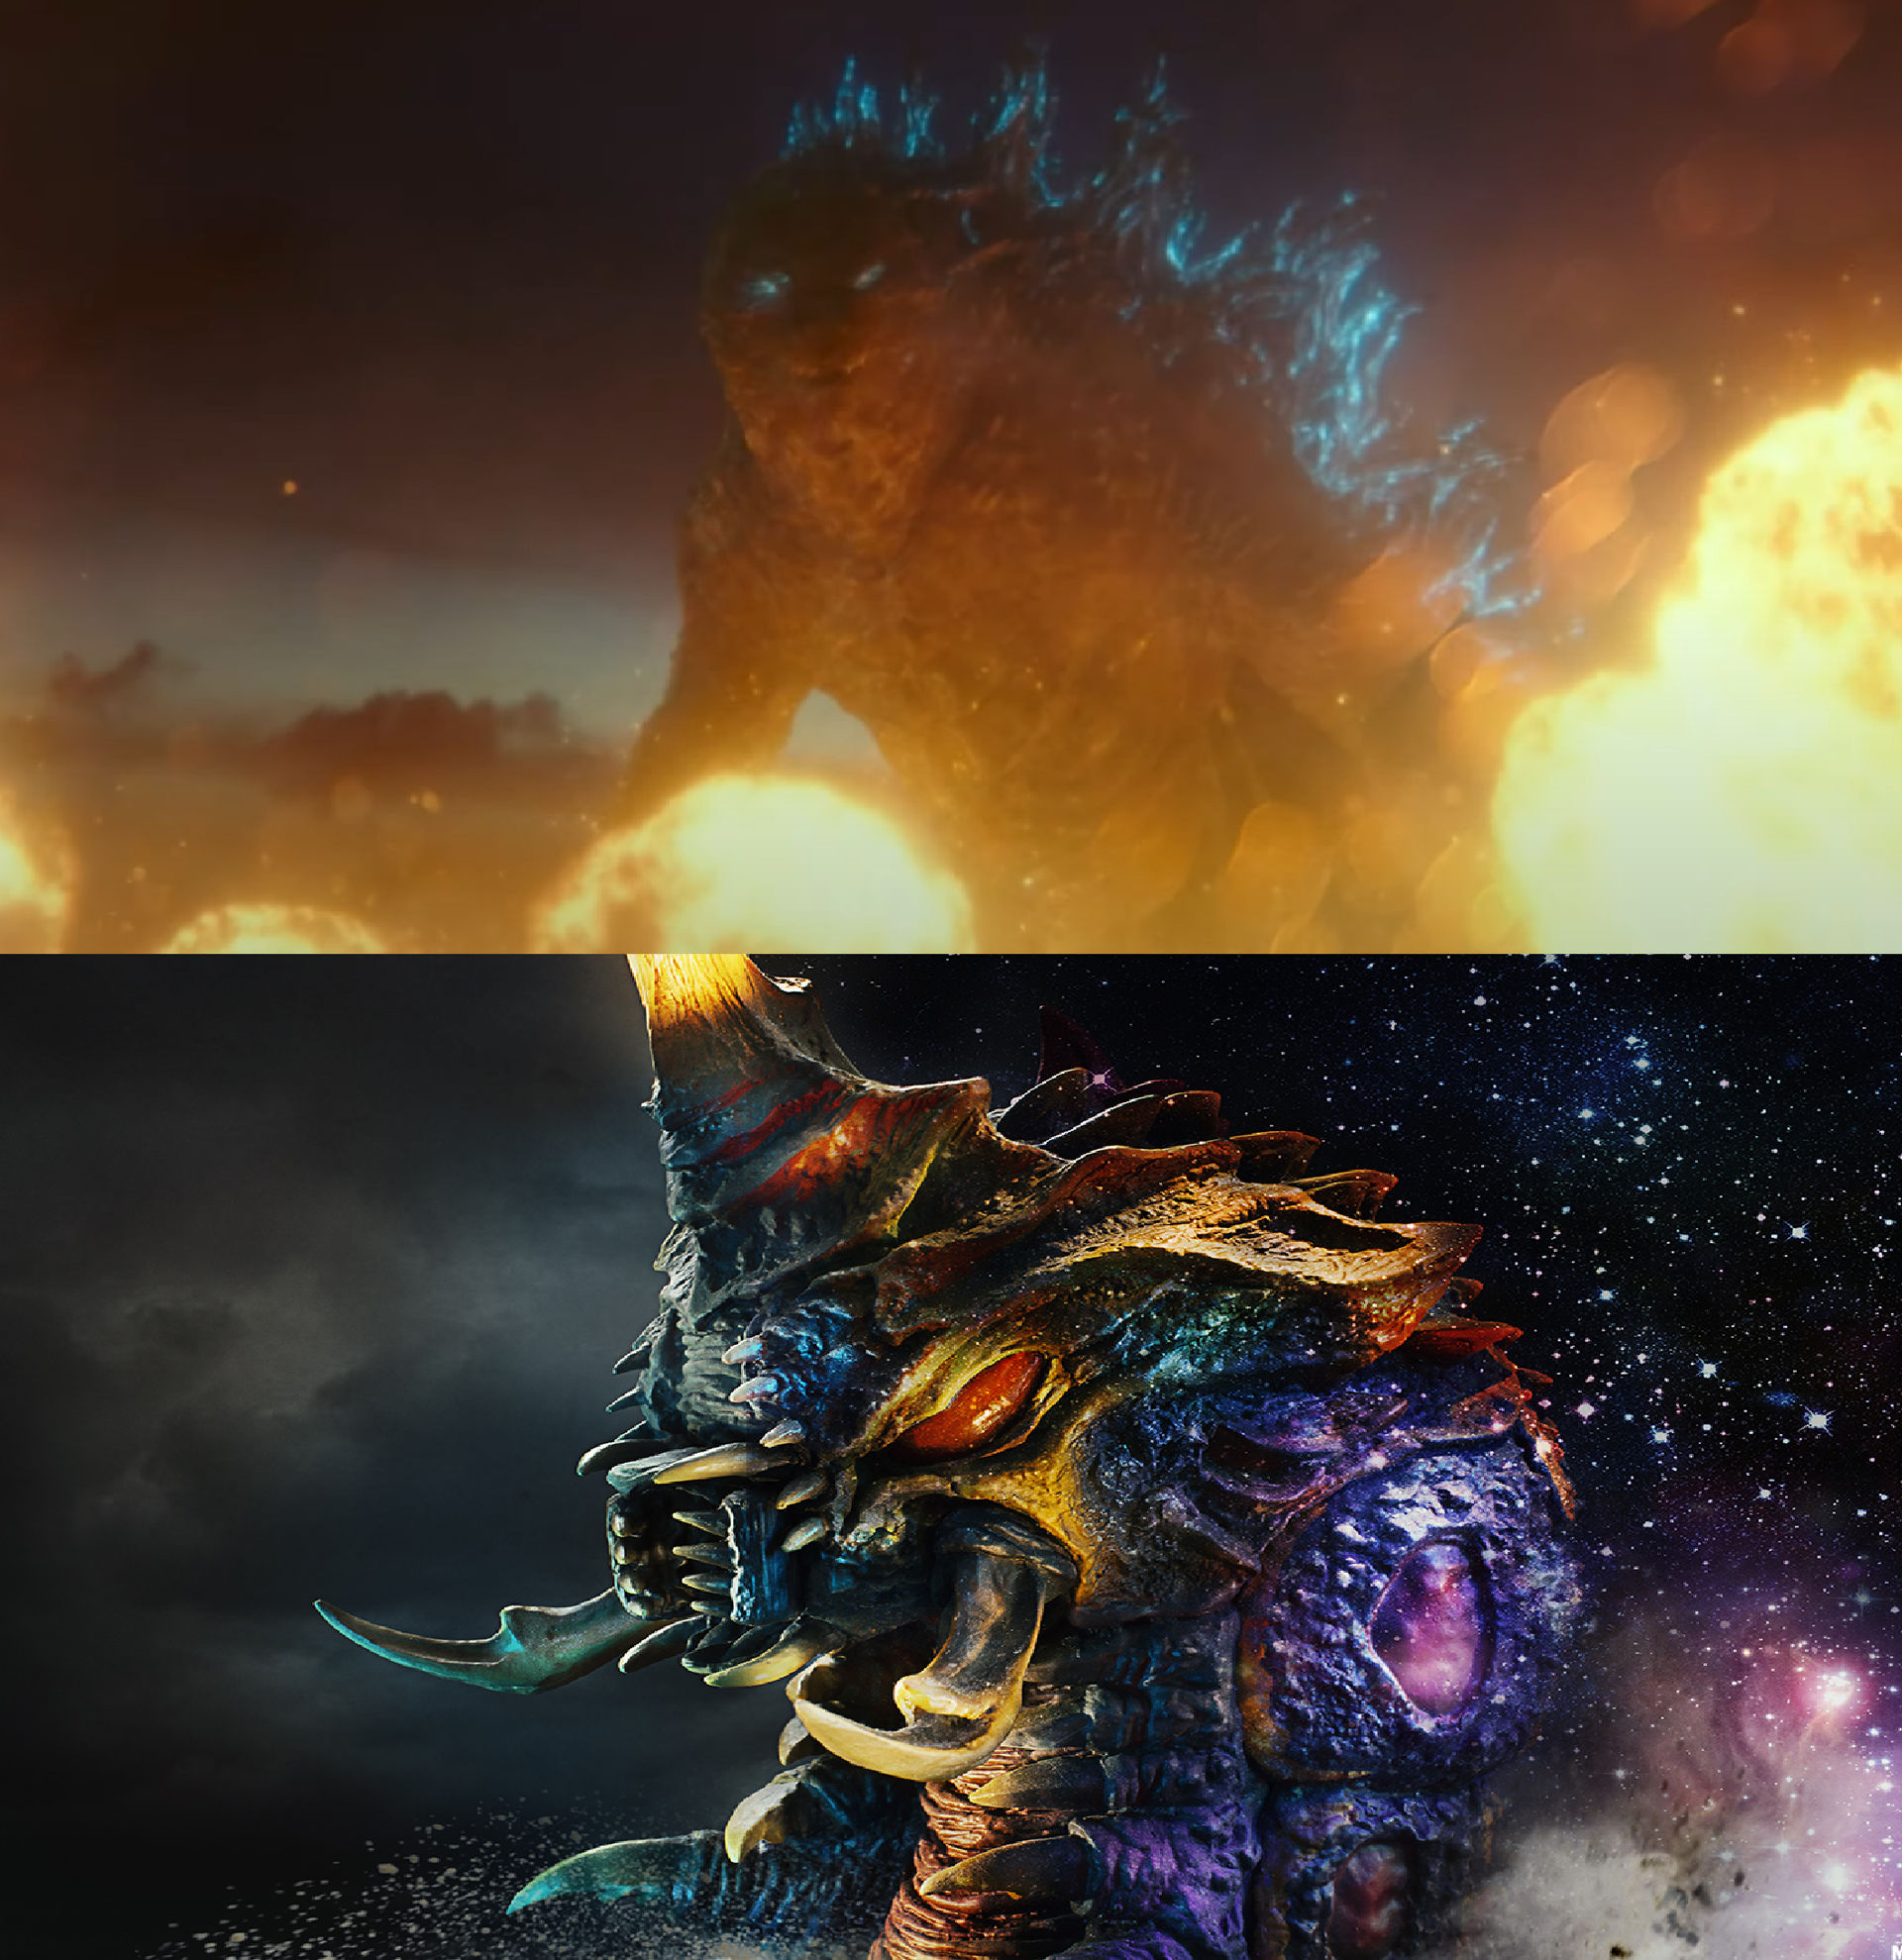 Godzilla is Gonna Cry by MnstrFrc on DeviantArt